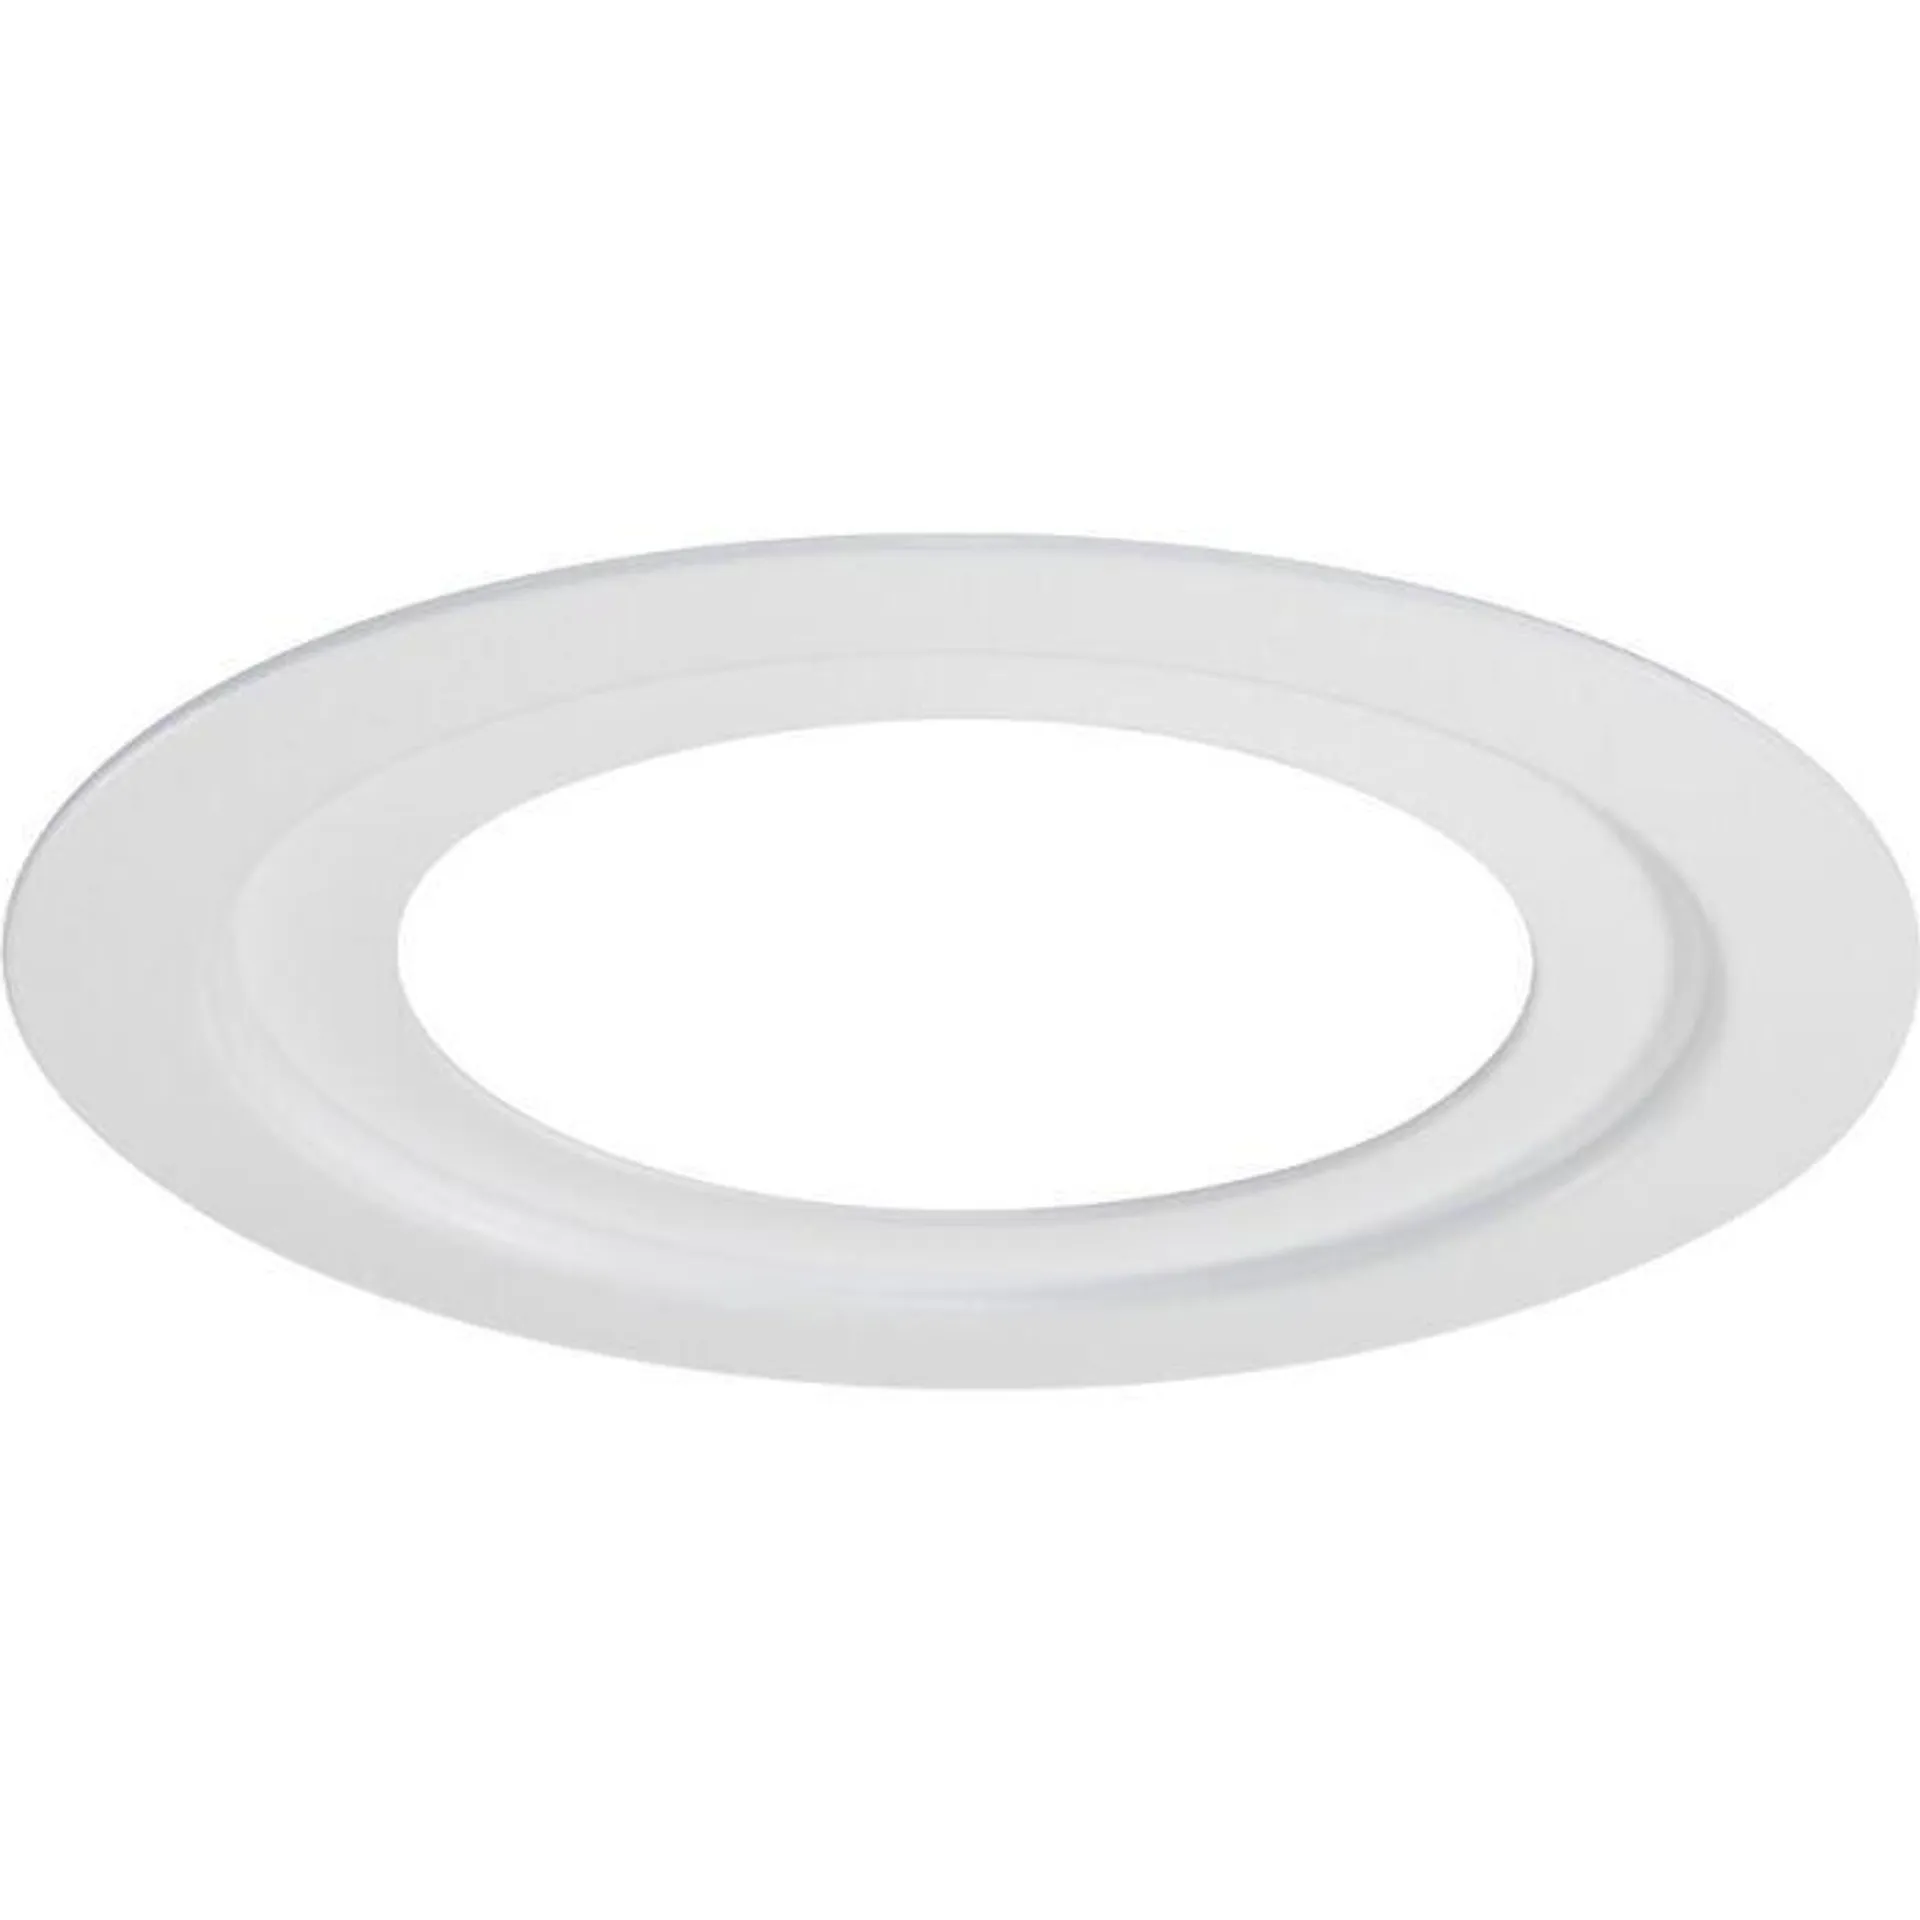 Tegra White 15Cm Round Convertor Plate